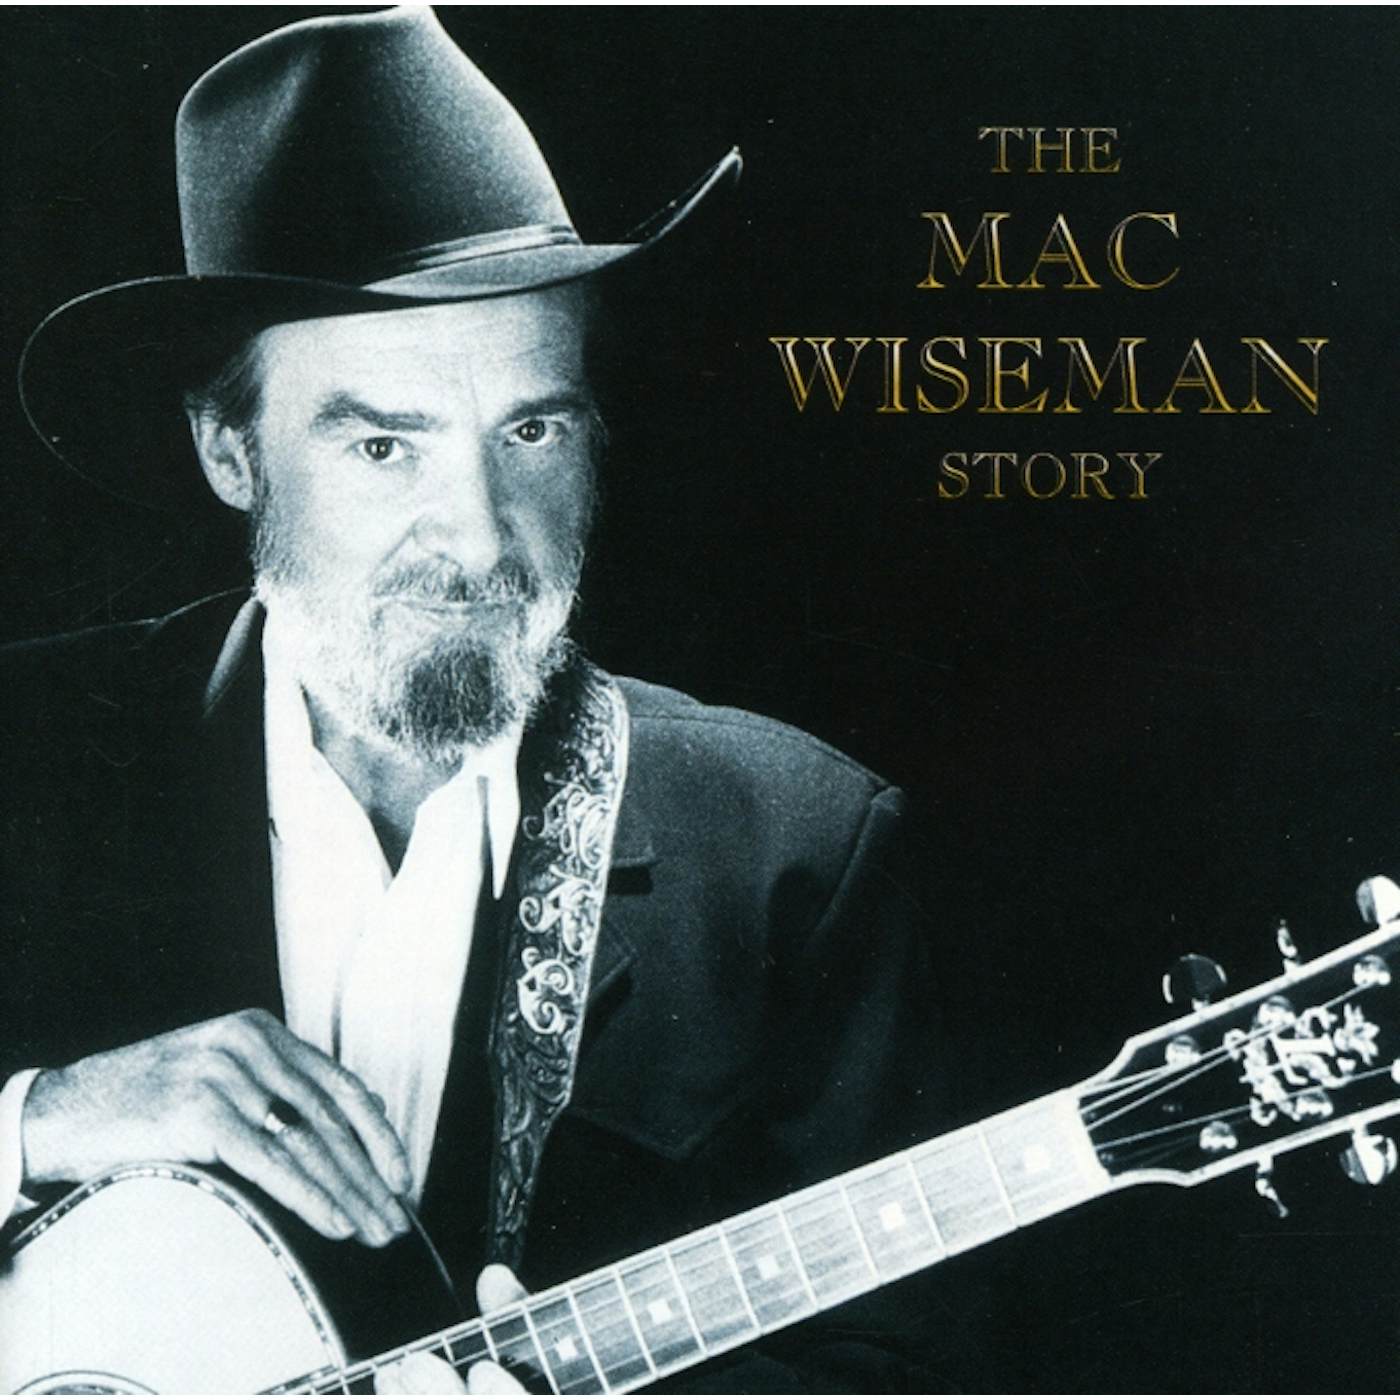 MAC WISEMAN STORY CD